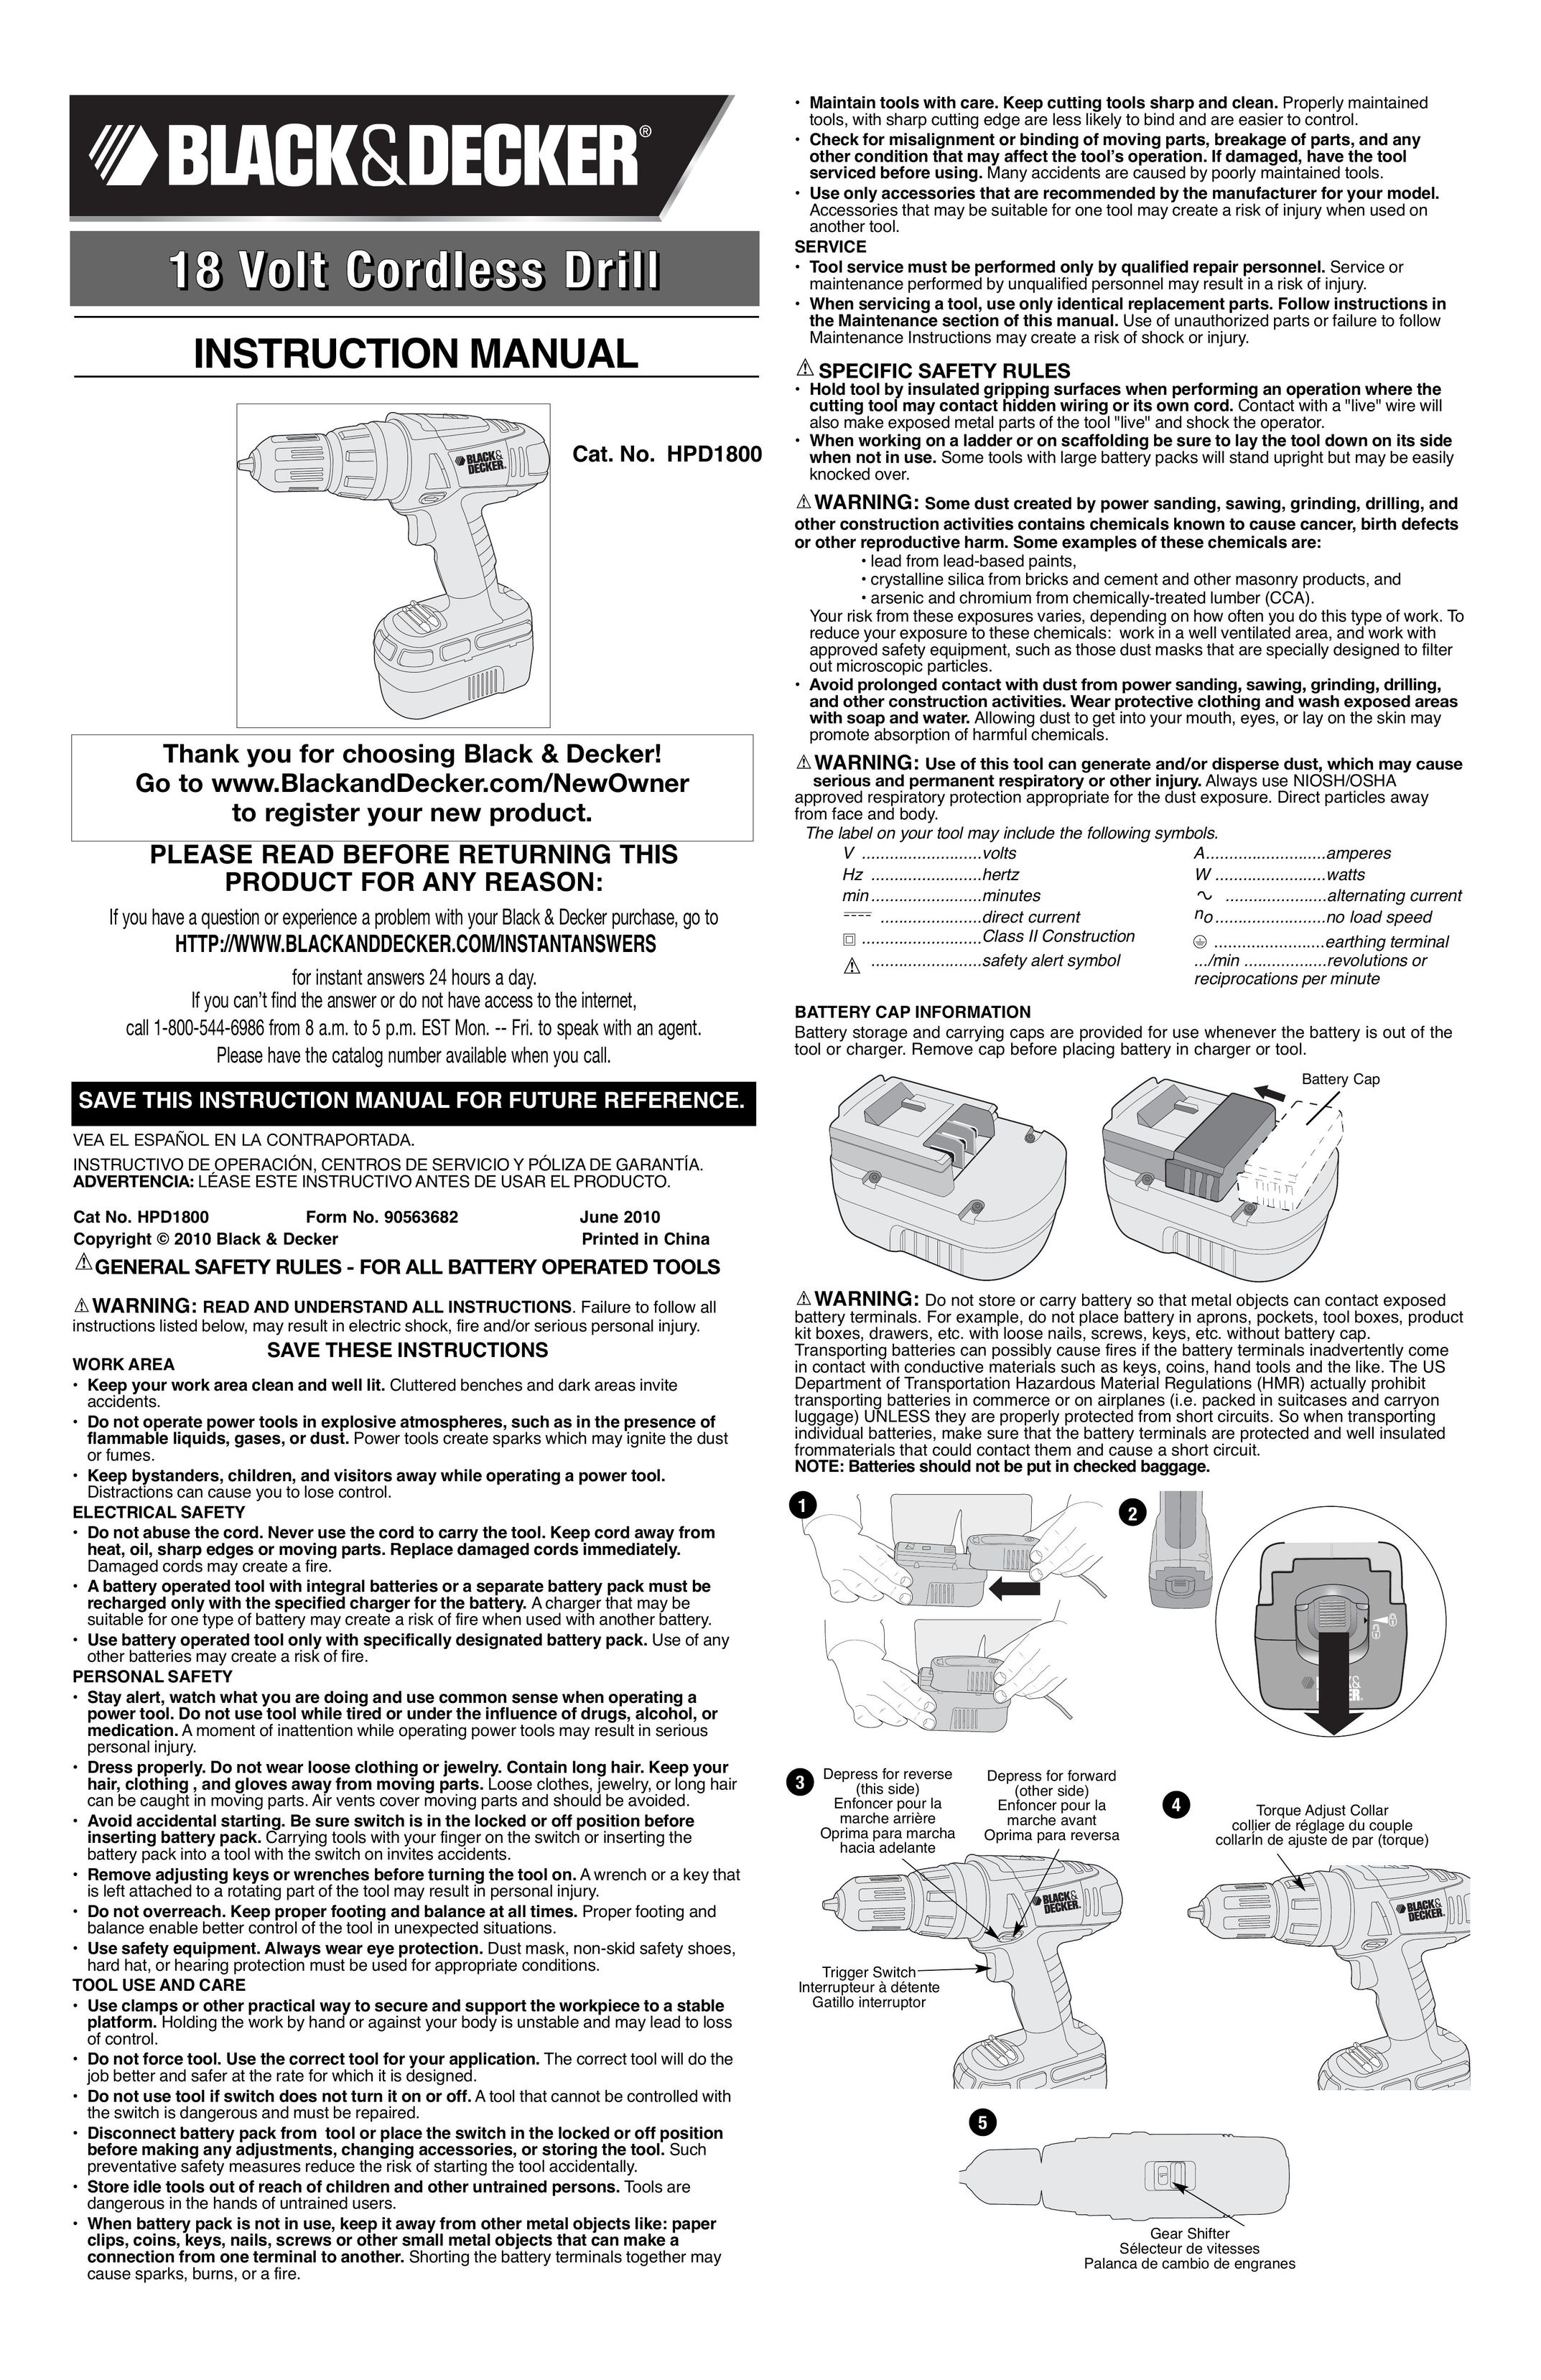 Black & Decker 90563682 Cordless Drill User Manual